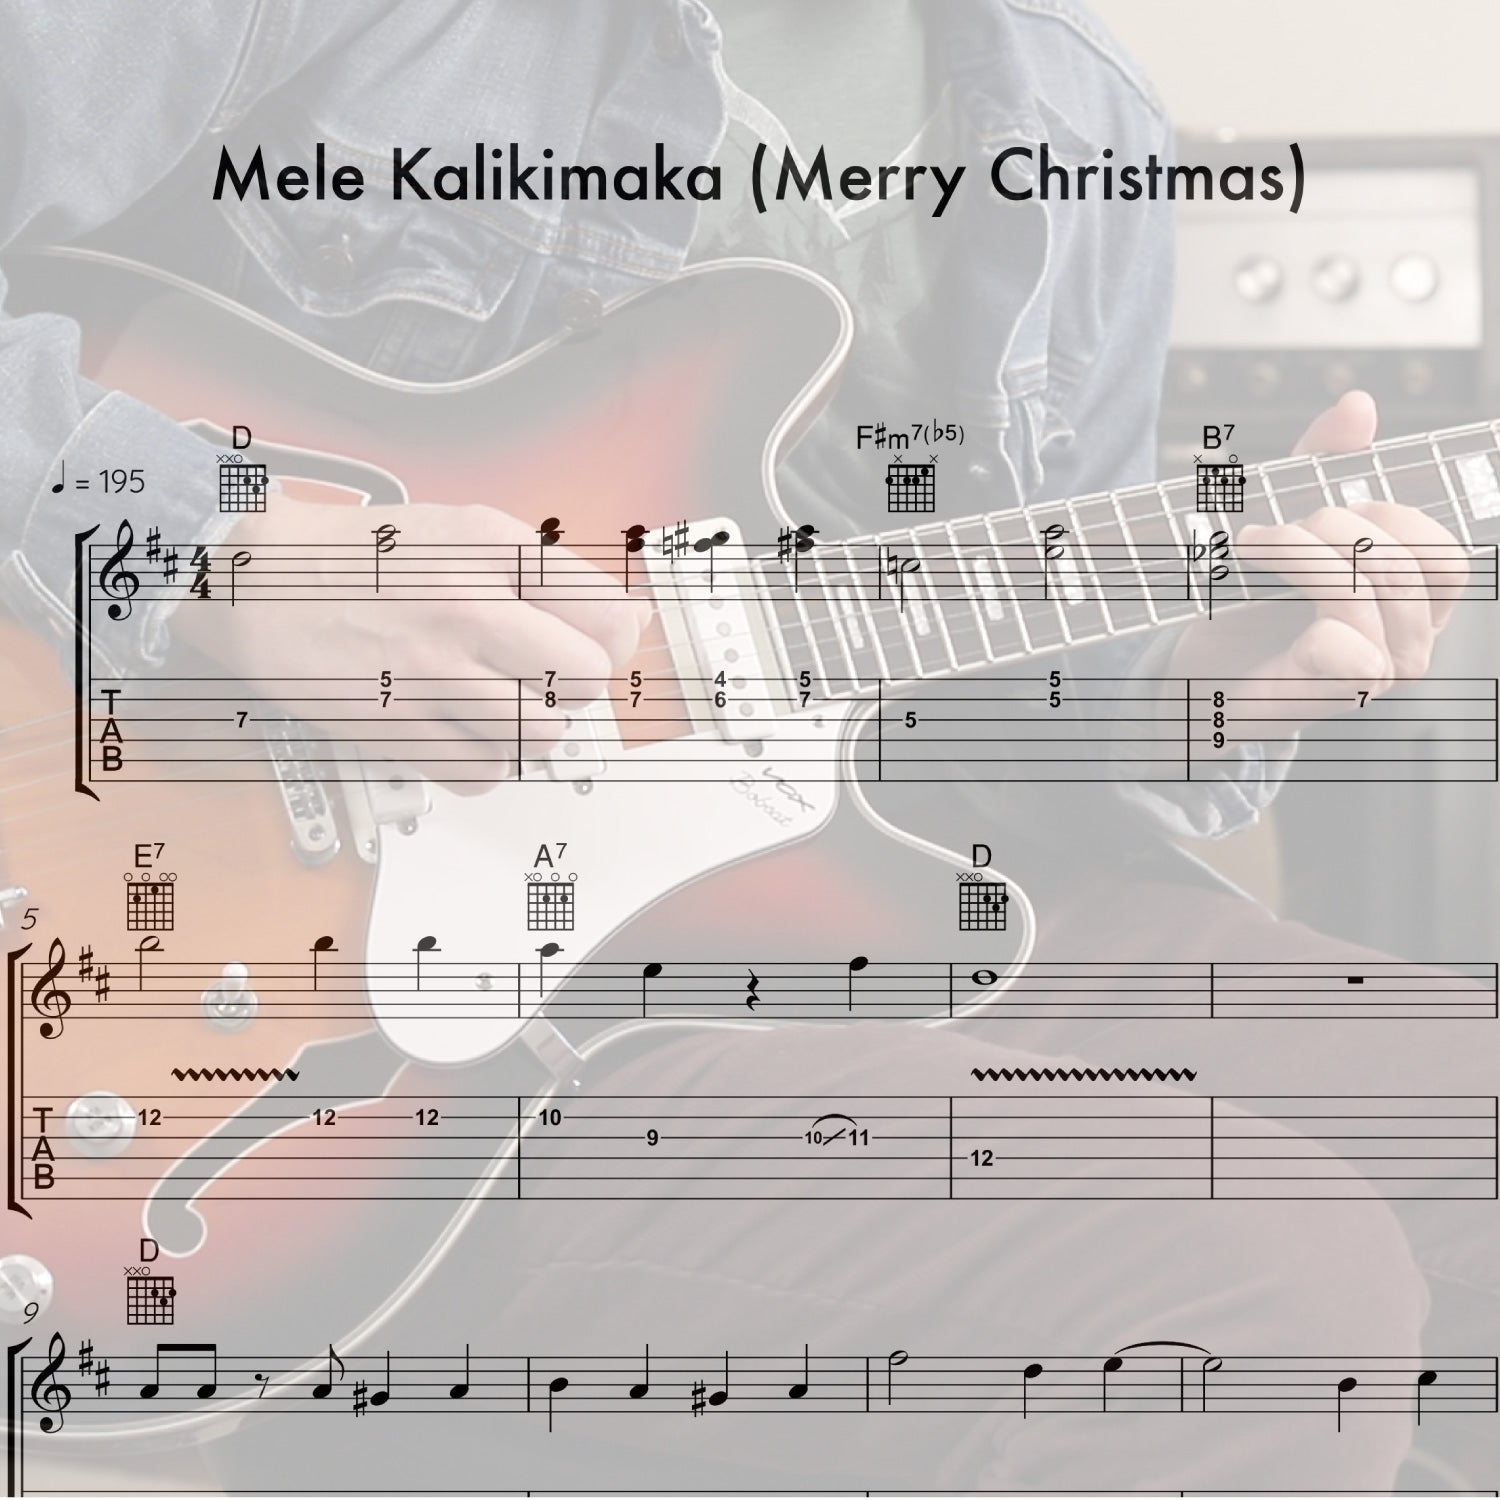 "Mele Kalikimaka (Merry Christmas)"